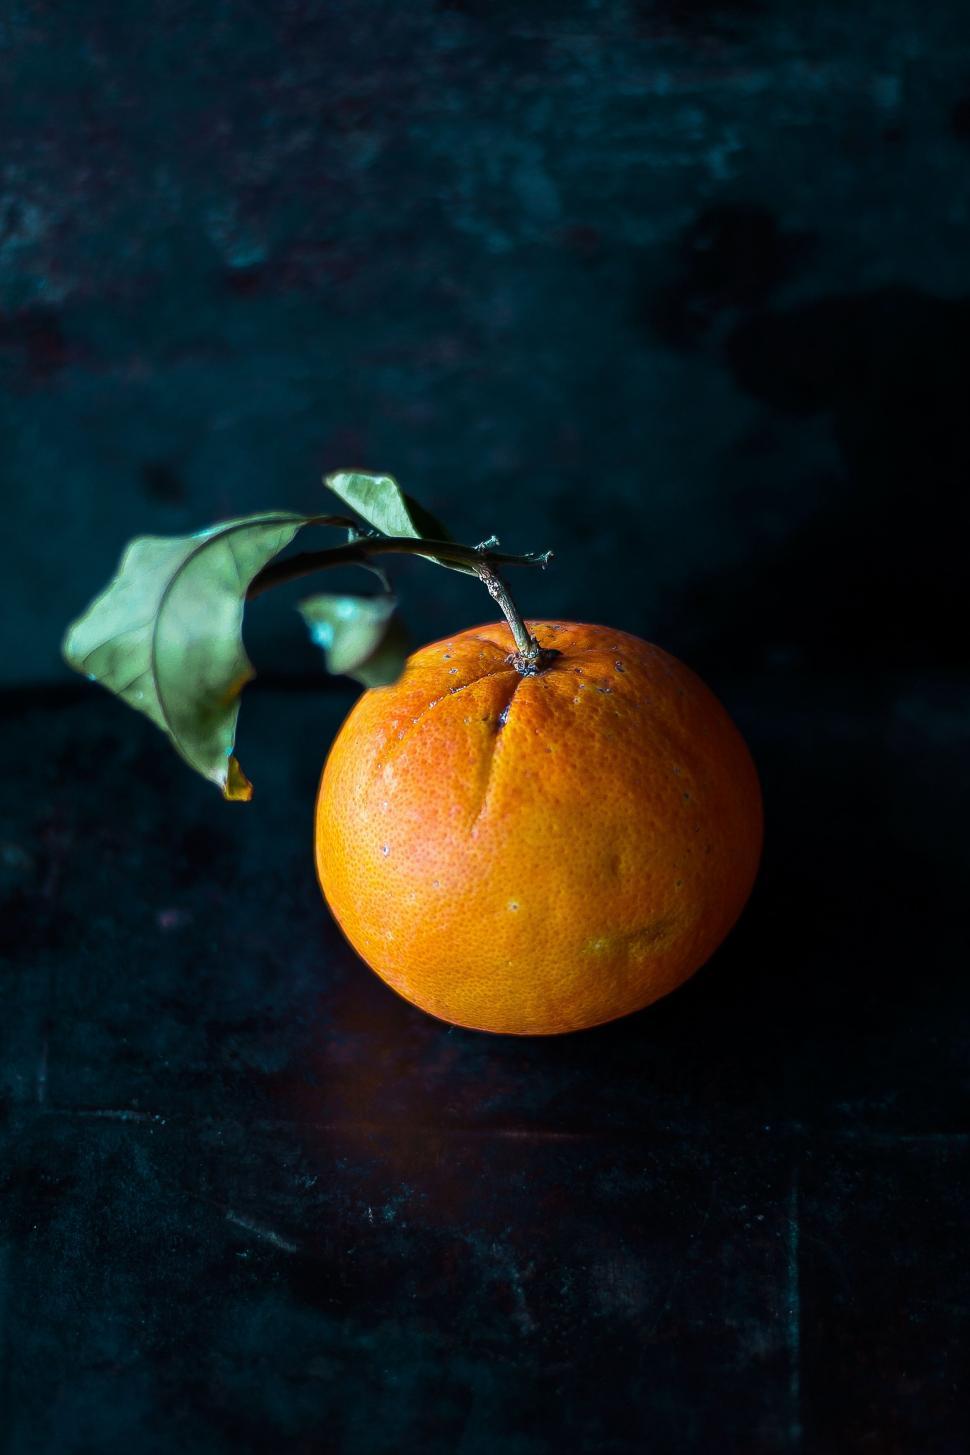 Free Image of orange fruit citrus vitamin food ripe juicy healthy fresh tangerine juice sweet freshness organic produce 